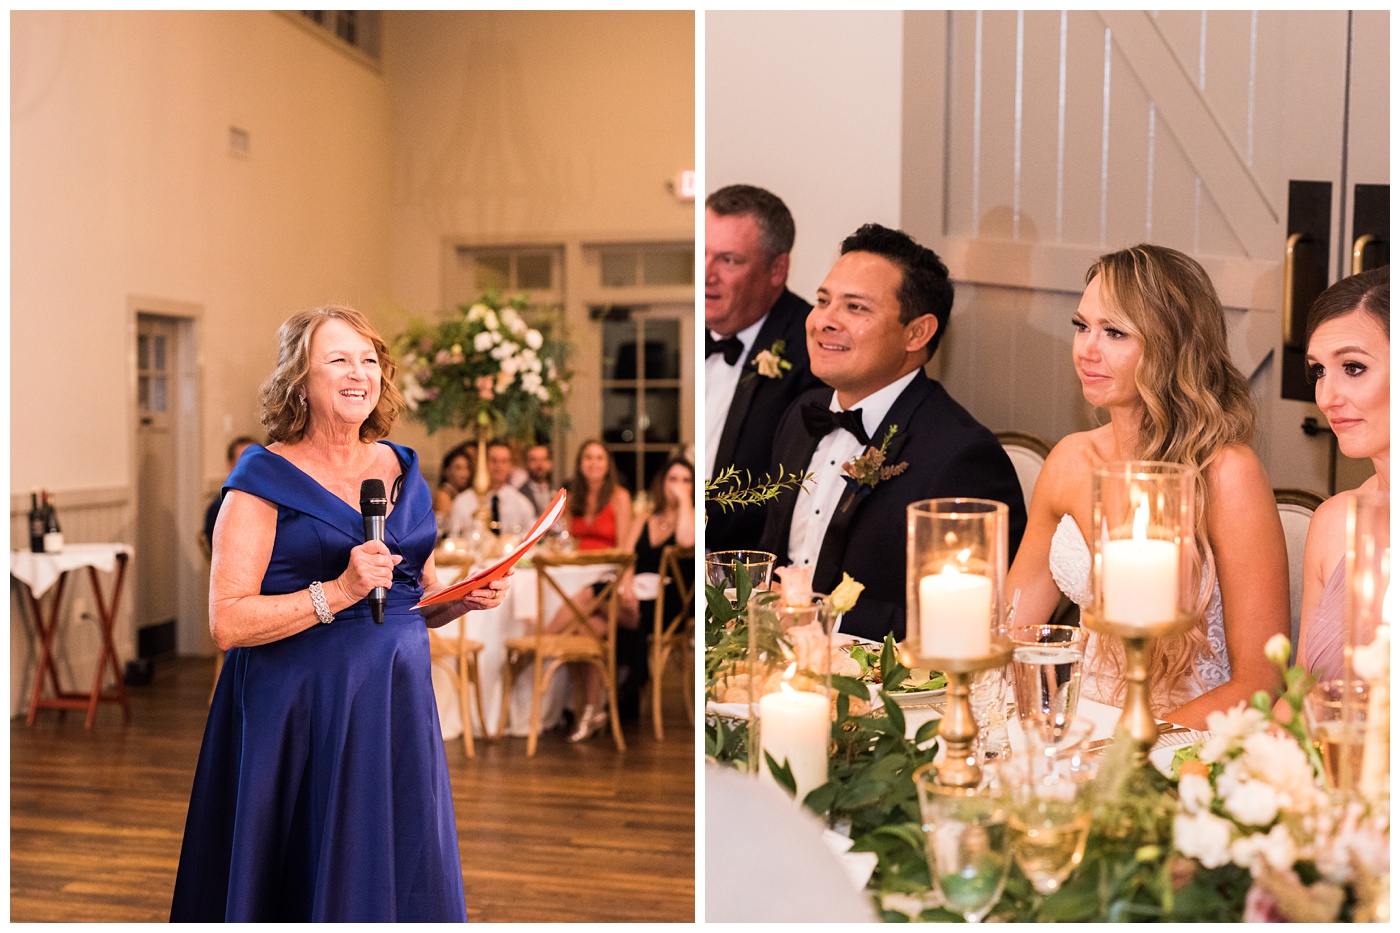 Wedding reception speeches at King Family Vineyard in Charlottesville VA 